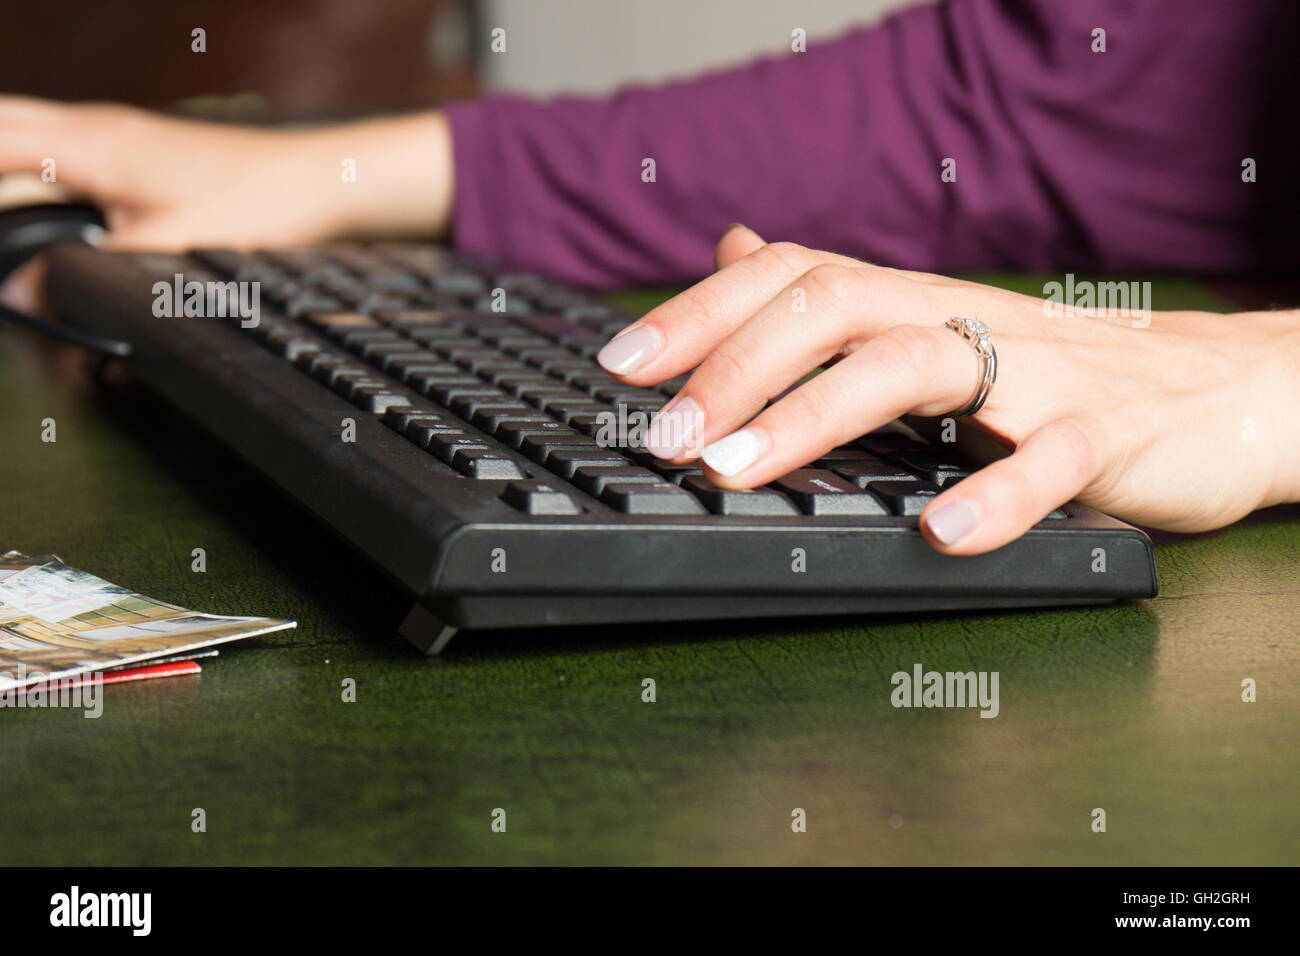 Woman's hand at keyboard typing at work Stock Photo